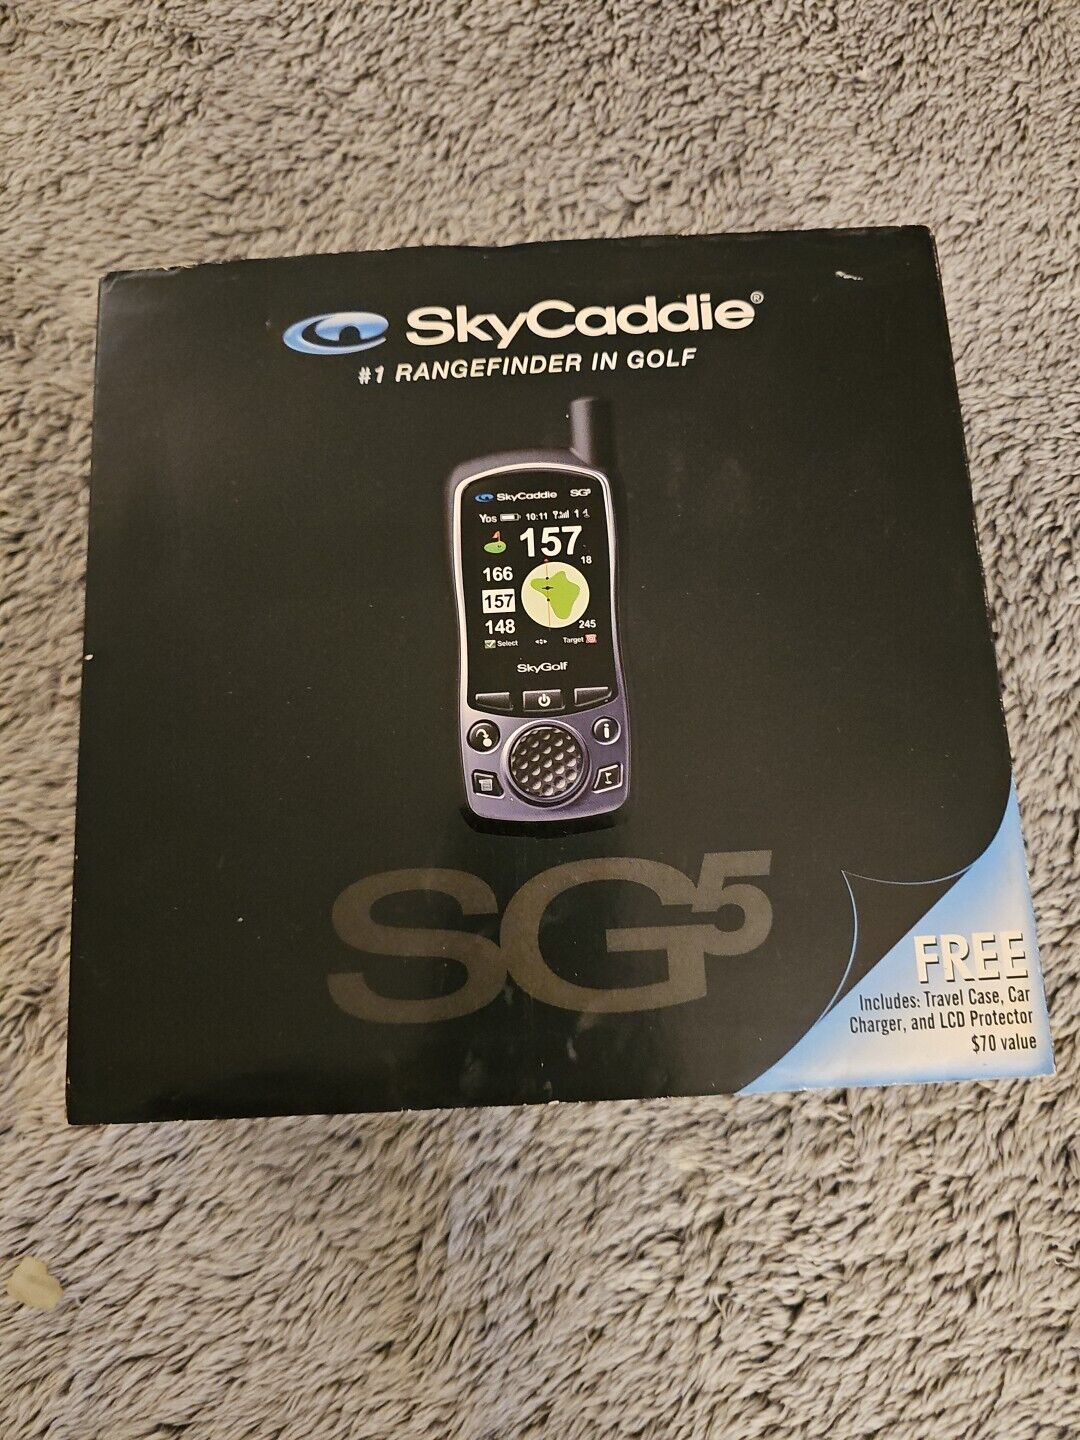 SkyGolf SkyCaddie SG5 Rangefinder GPS In original box. Includes Travel case